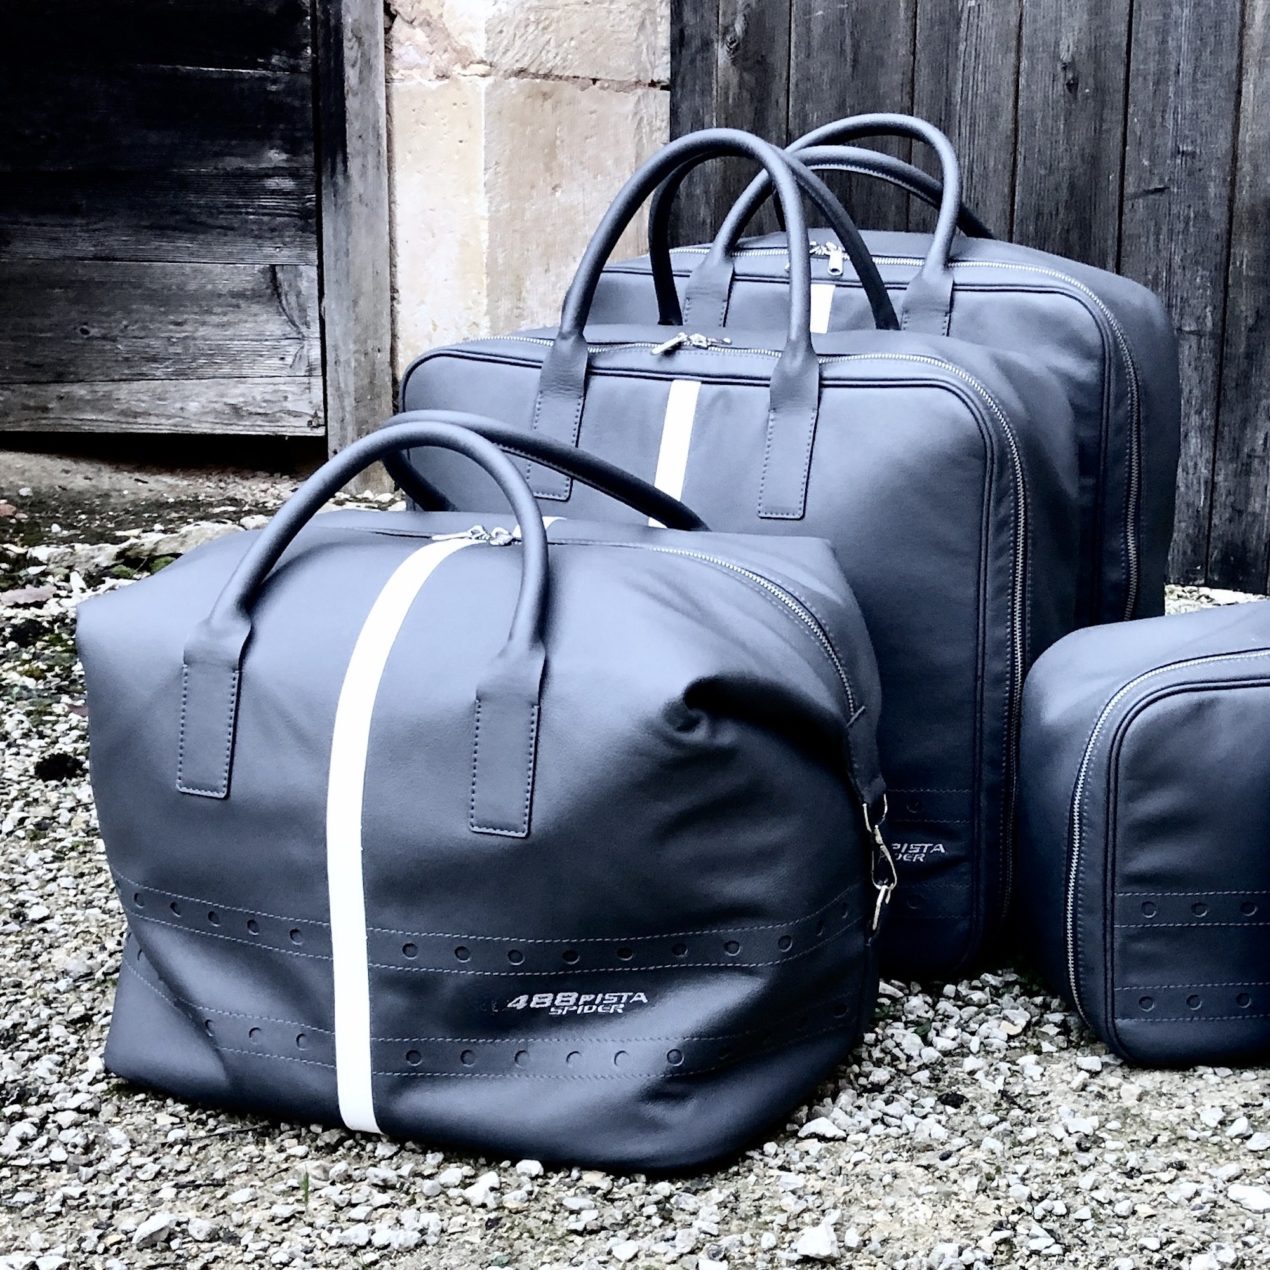 bag suitcase Made to measure bespoke fitted luggage Ferrari Daytona or Racing seats Schedoni